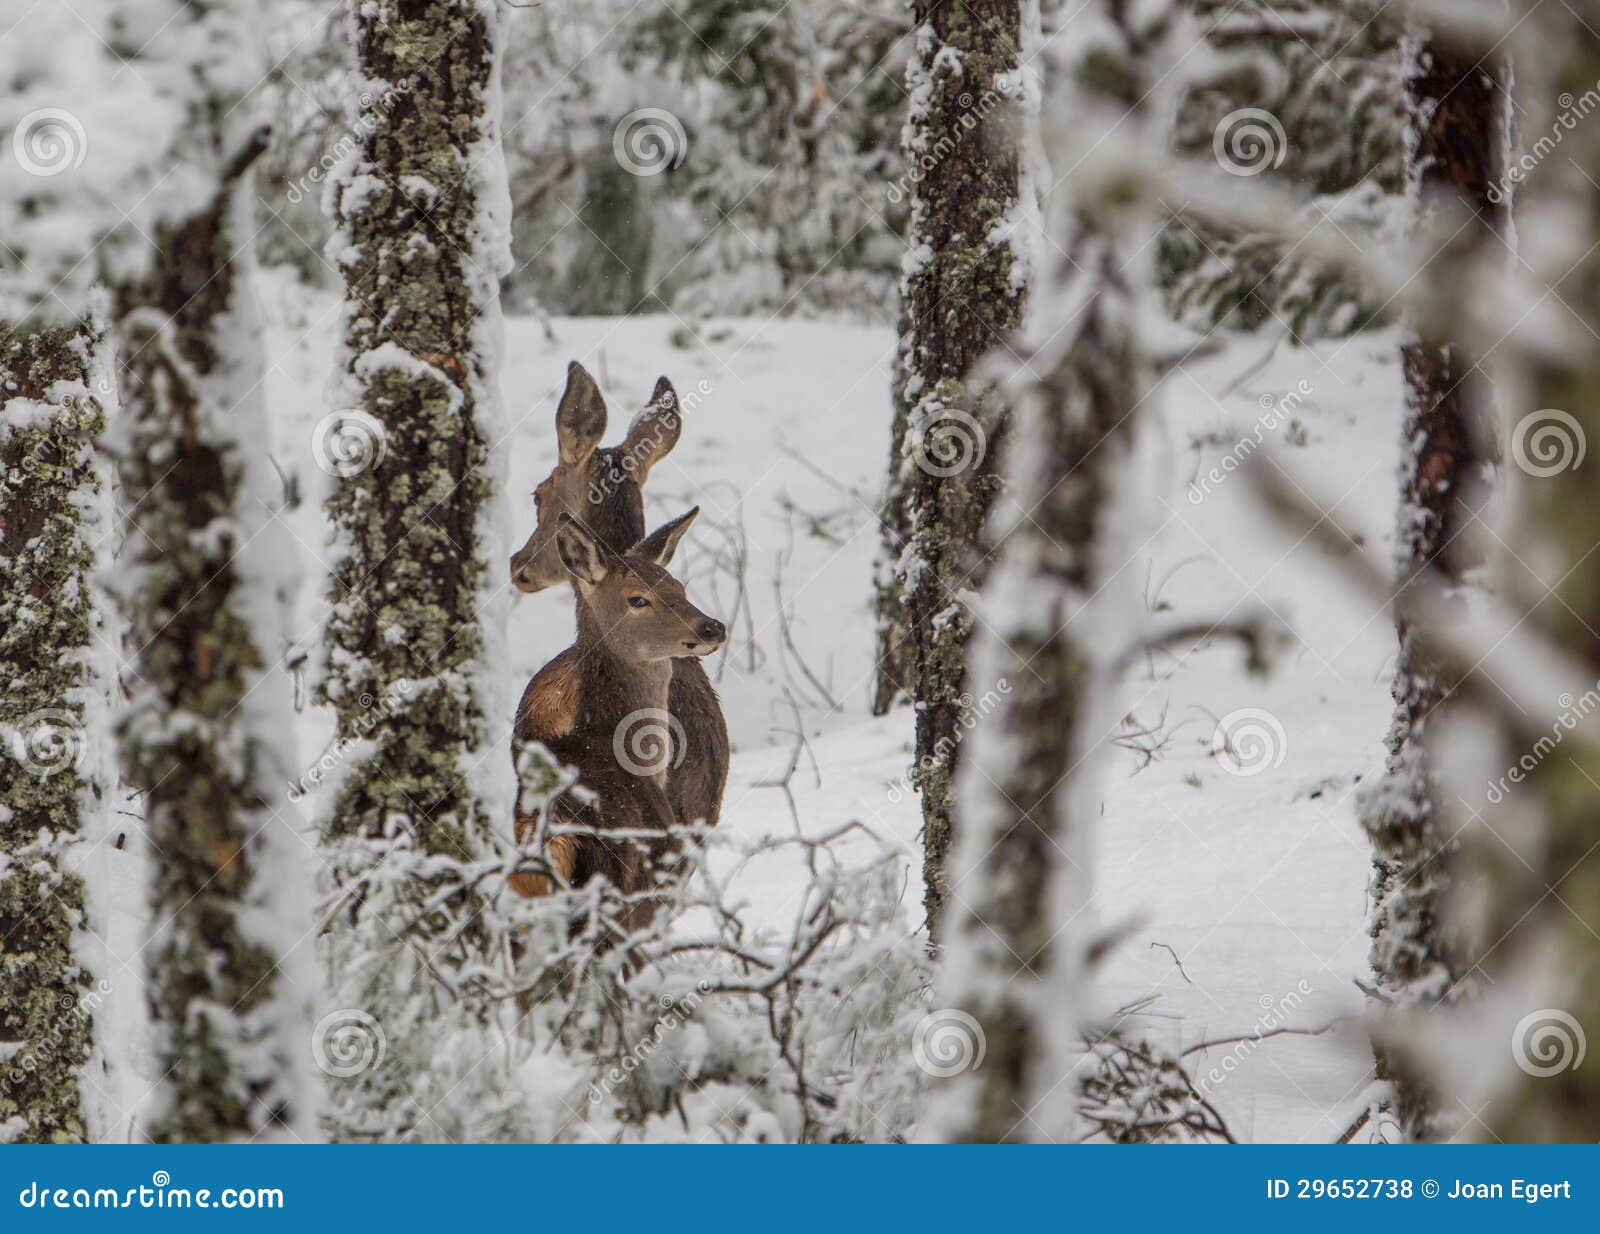 red deer in snowed forest